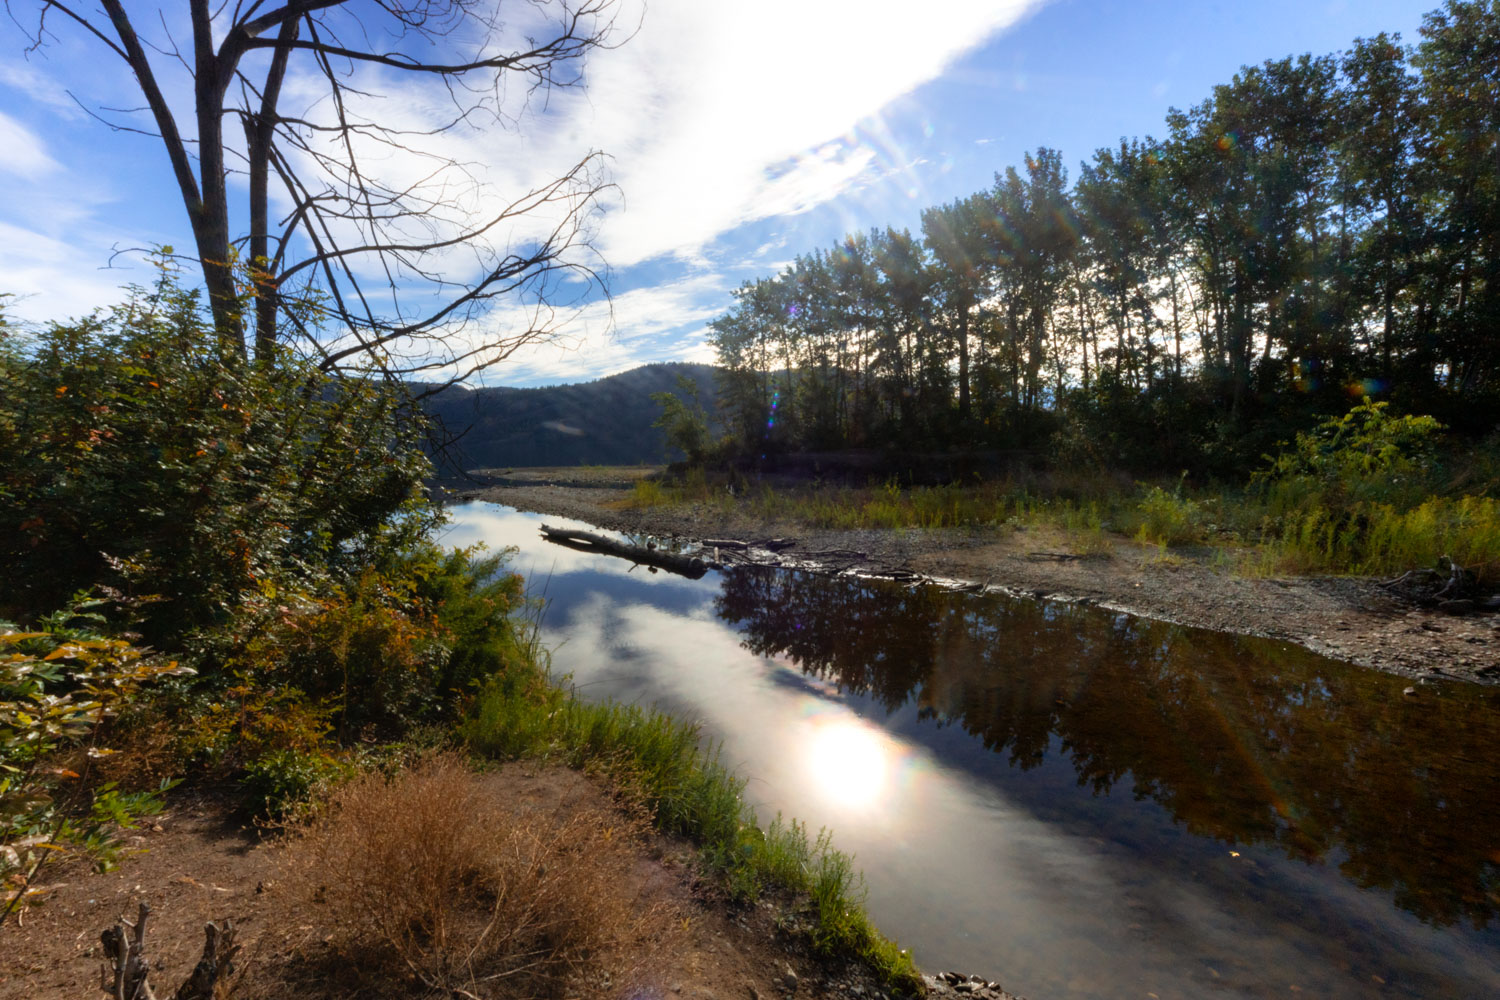 Bear Creek flows through the campground, ending at Okanagan Lake